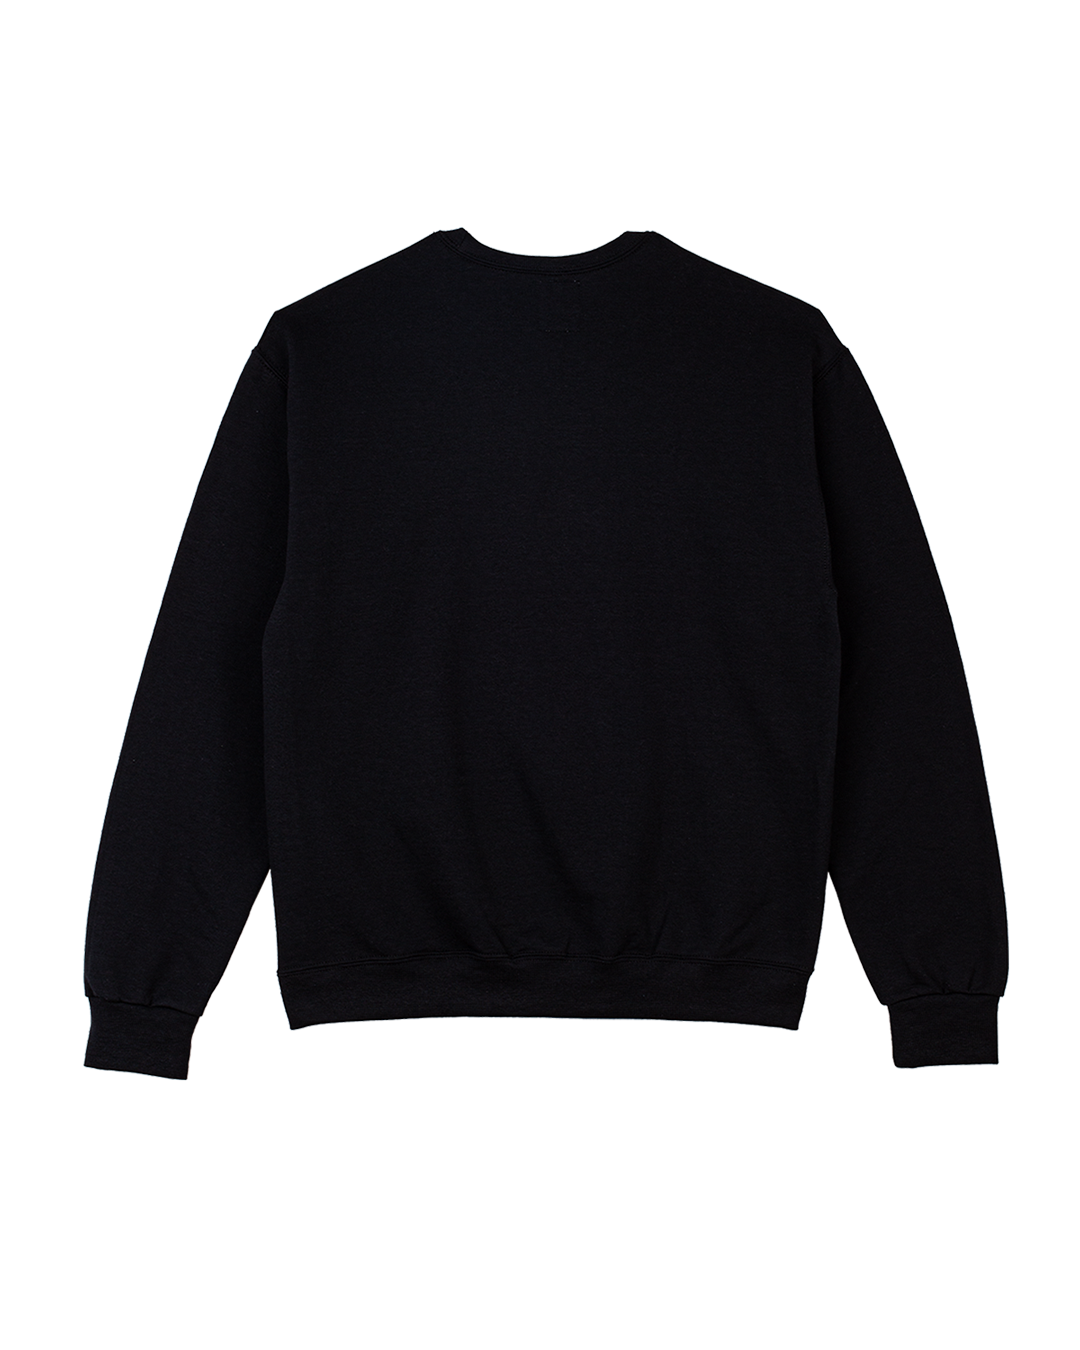 Superbad / Crew Neck Sweatshirt (Type-3)